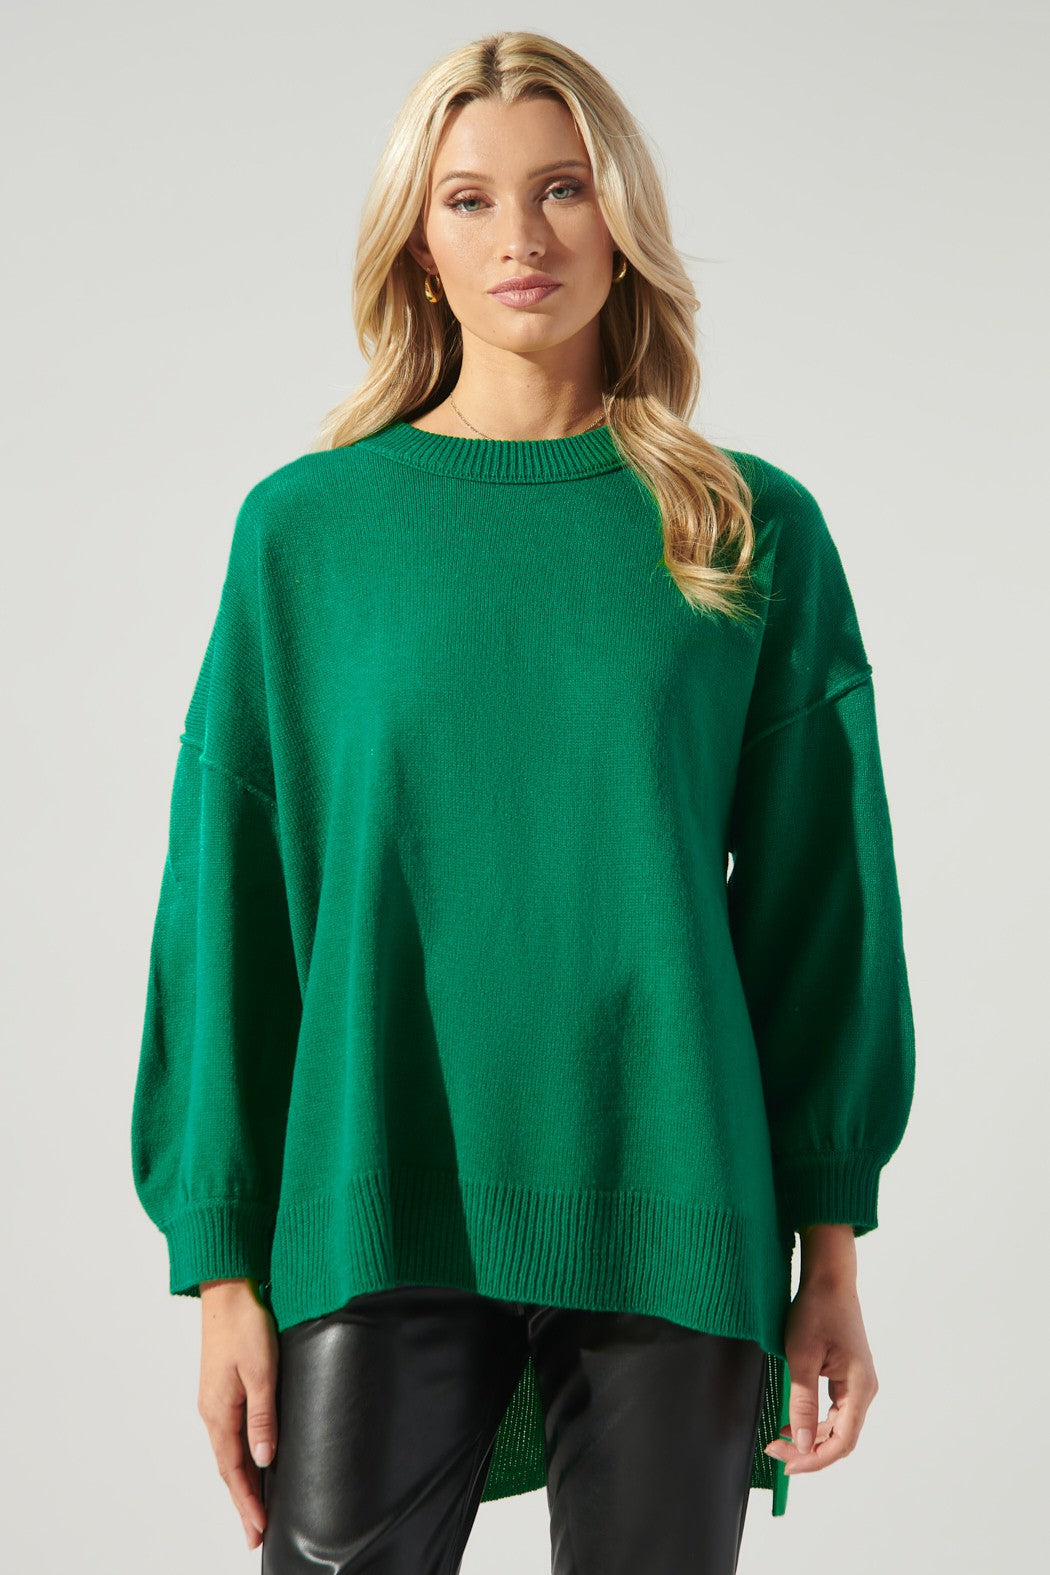 Meri Hi Low Tunic Sweater - Two Colors